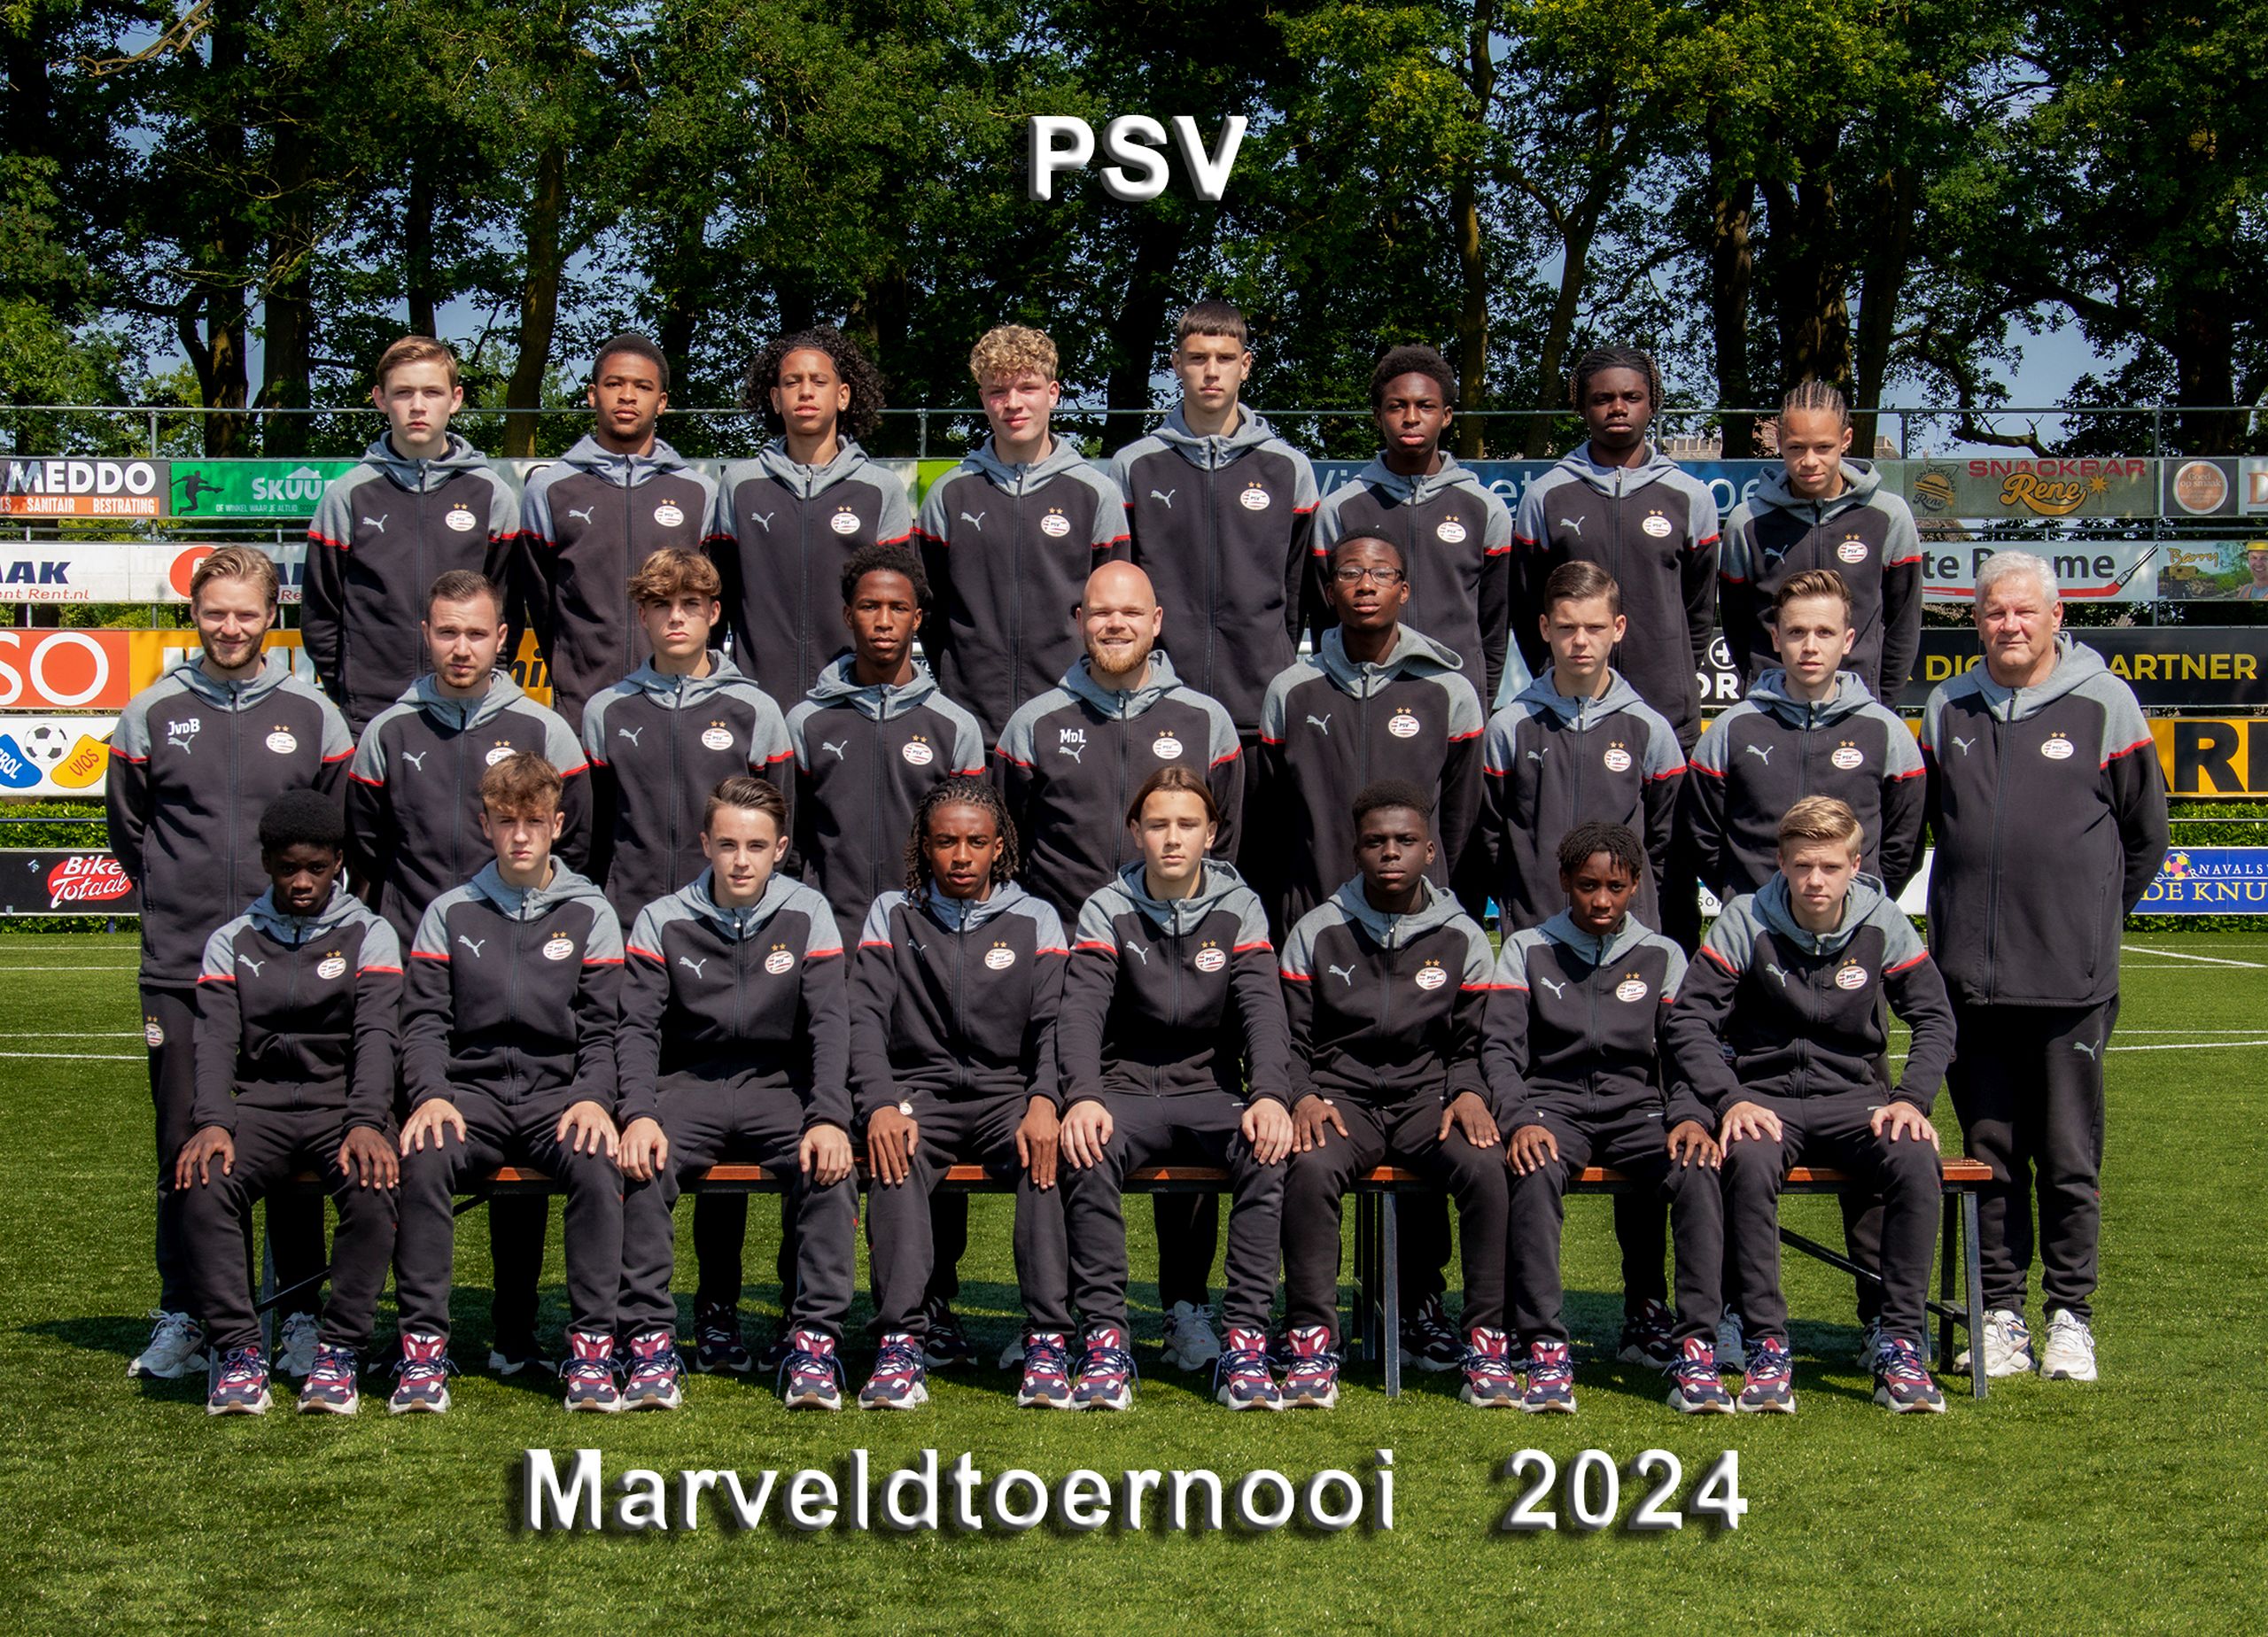 Marveld Tournament 2024 - Team PSV